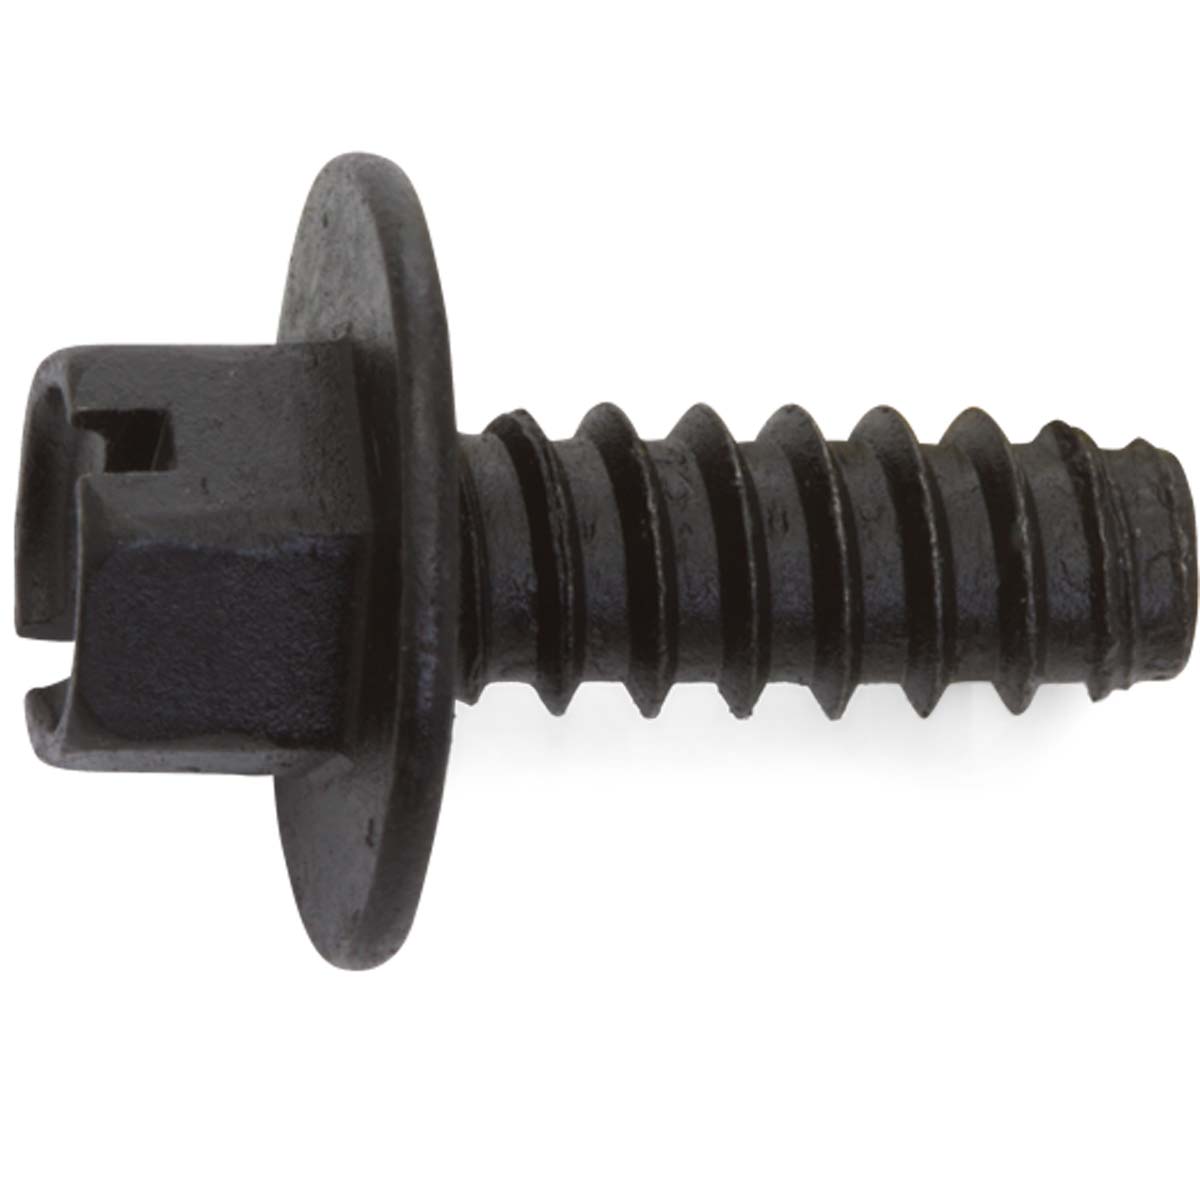 Image result for ford license plate screws